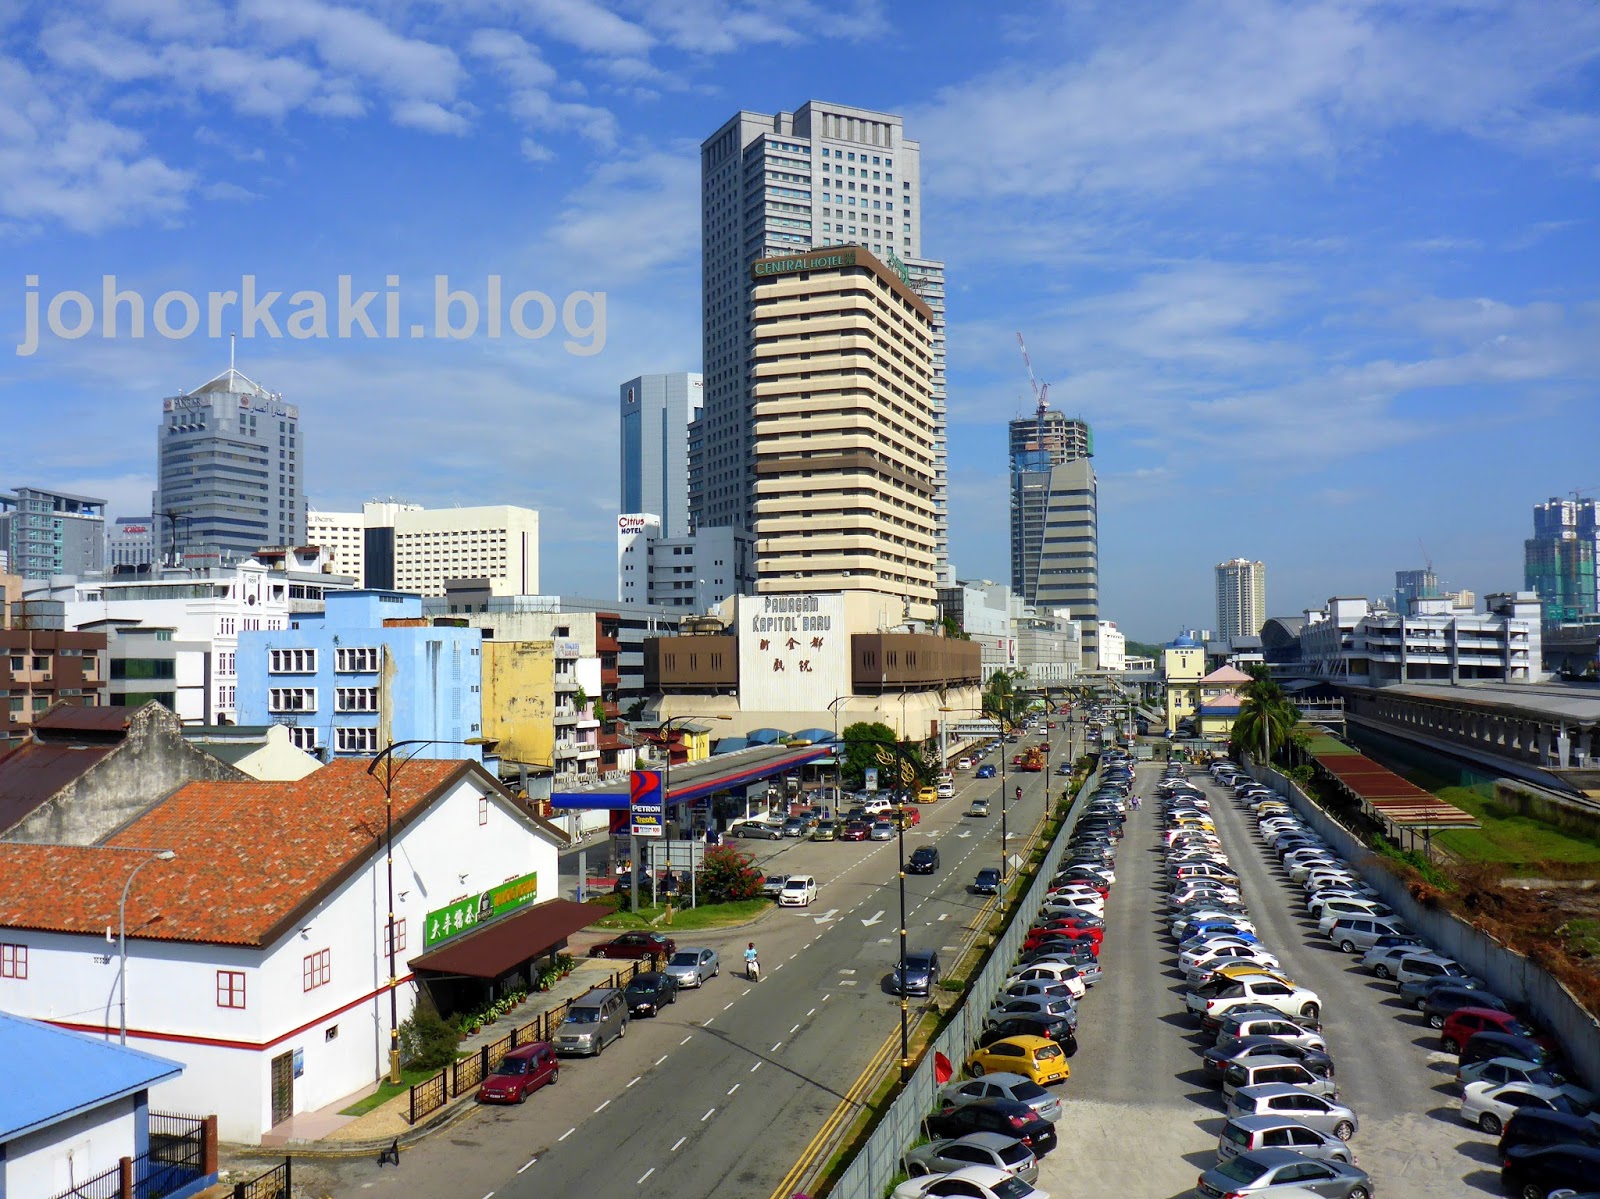 What to Eat in Johor Bahru JB - Halal Food Picks |Johor Kaki Travels